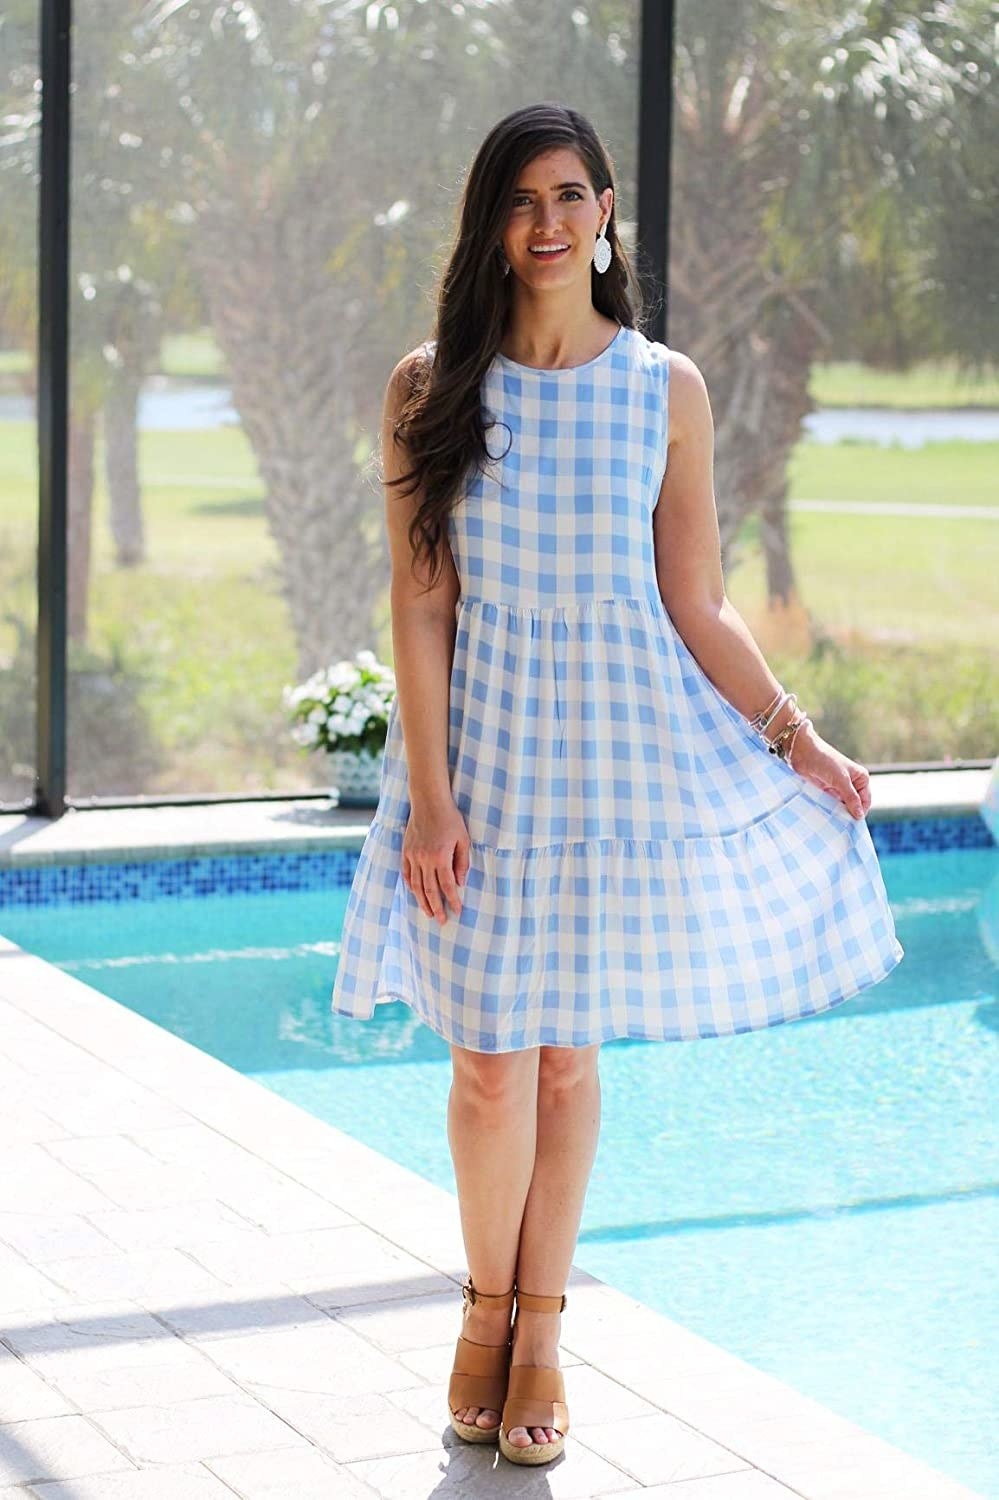 model wearing a blue gingham dress